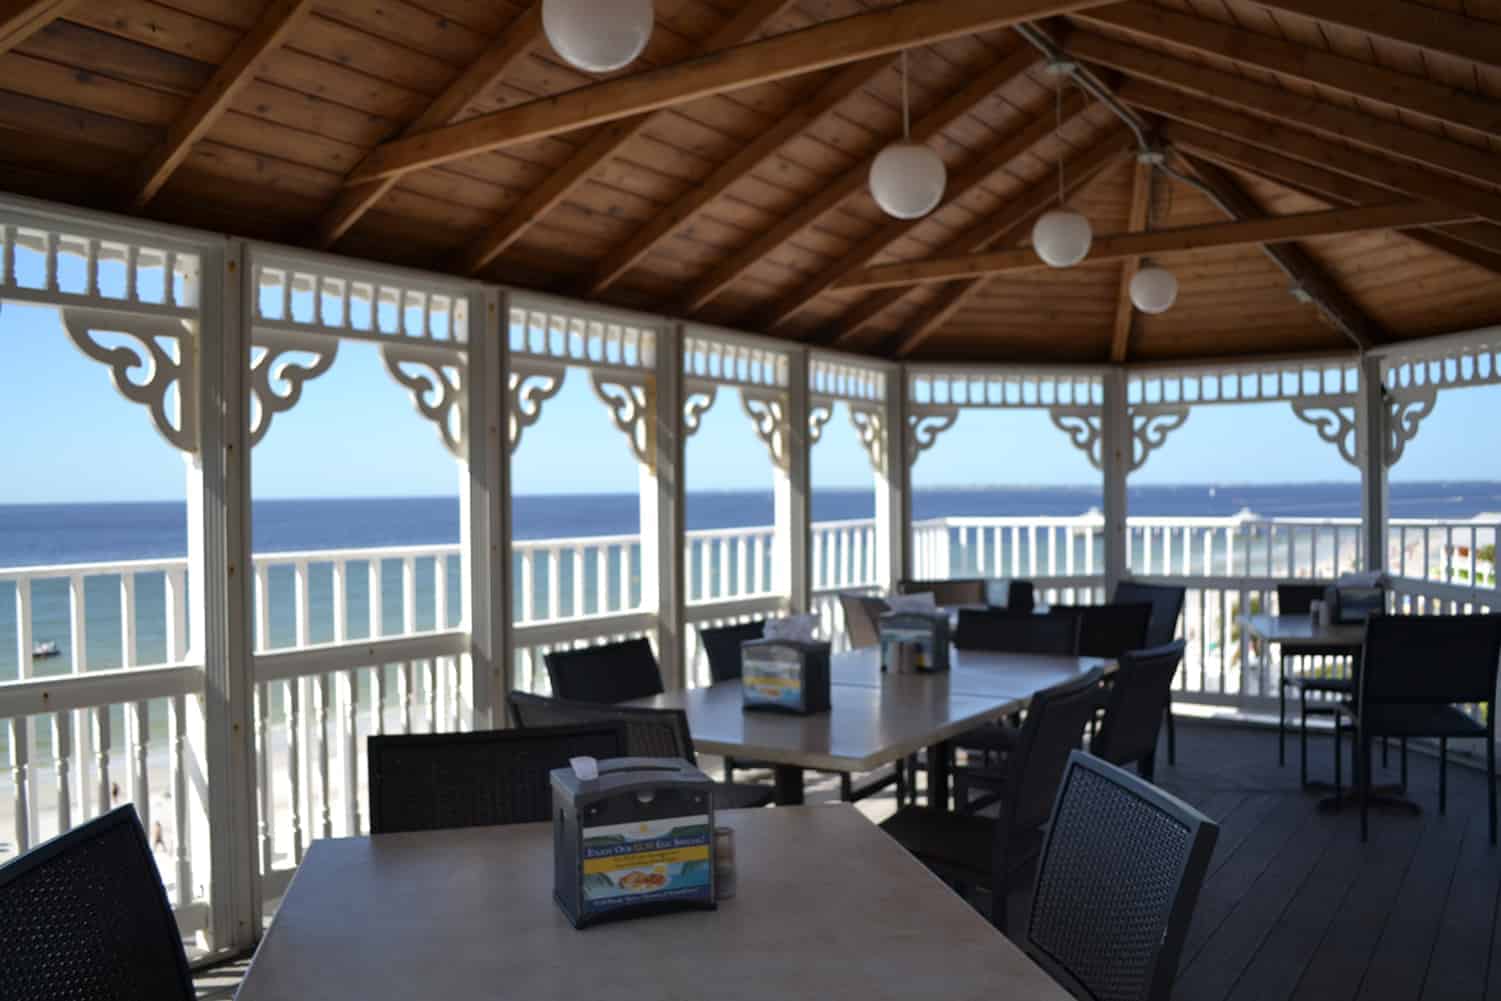 Sun Deck Restaurant | Outdoor Seating | Restaurants in Fort Myers